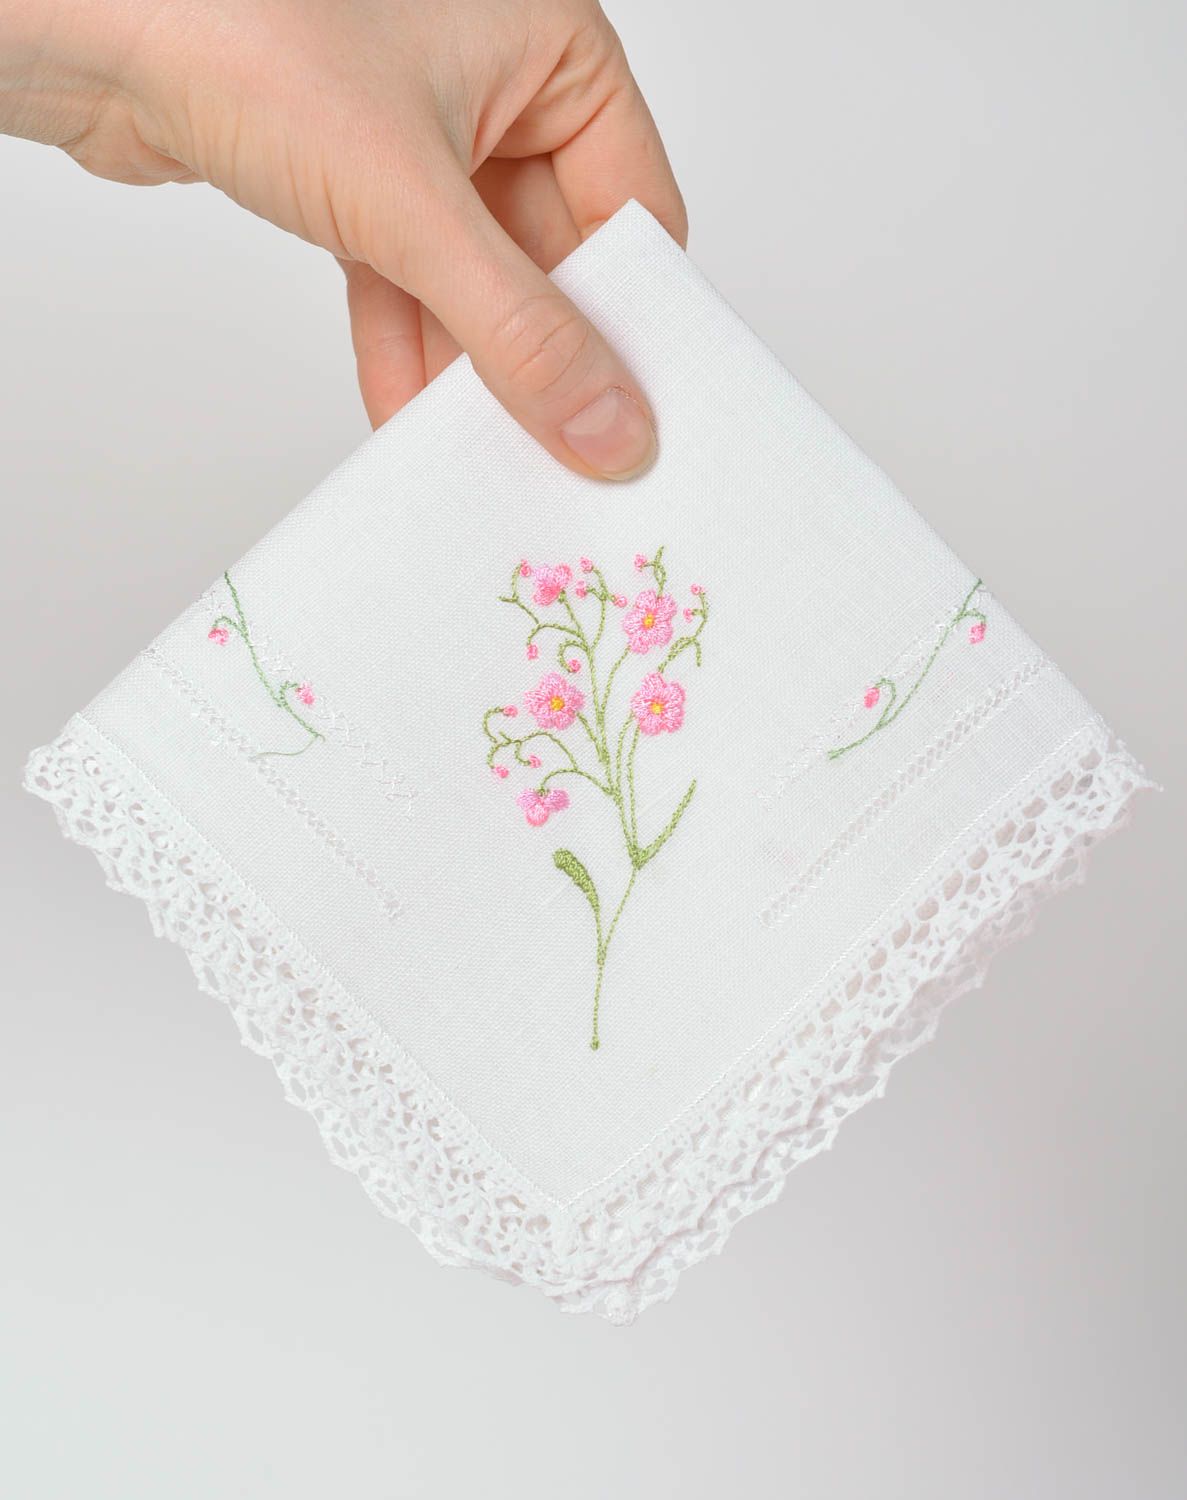 Handmade handkerchief designer handkerchief unusual gift painted handkerchief photo 3